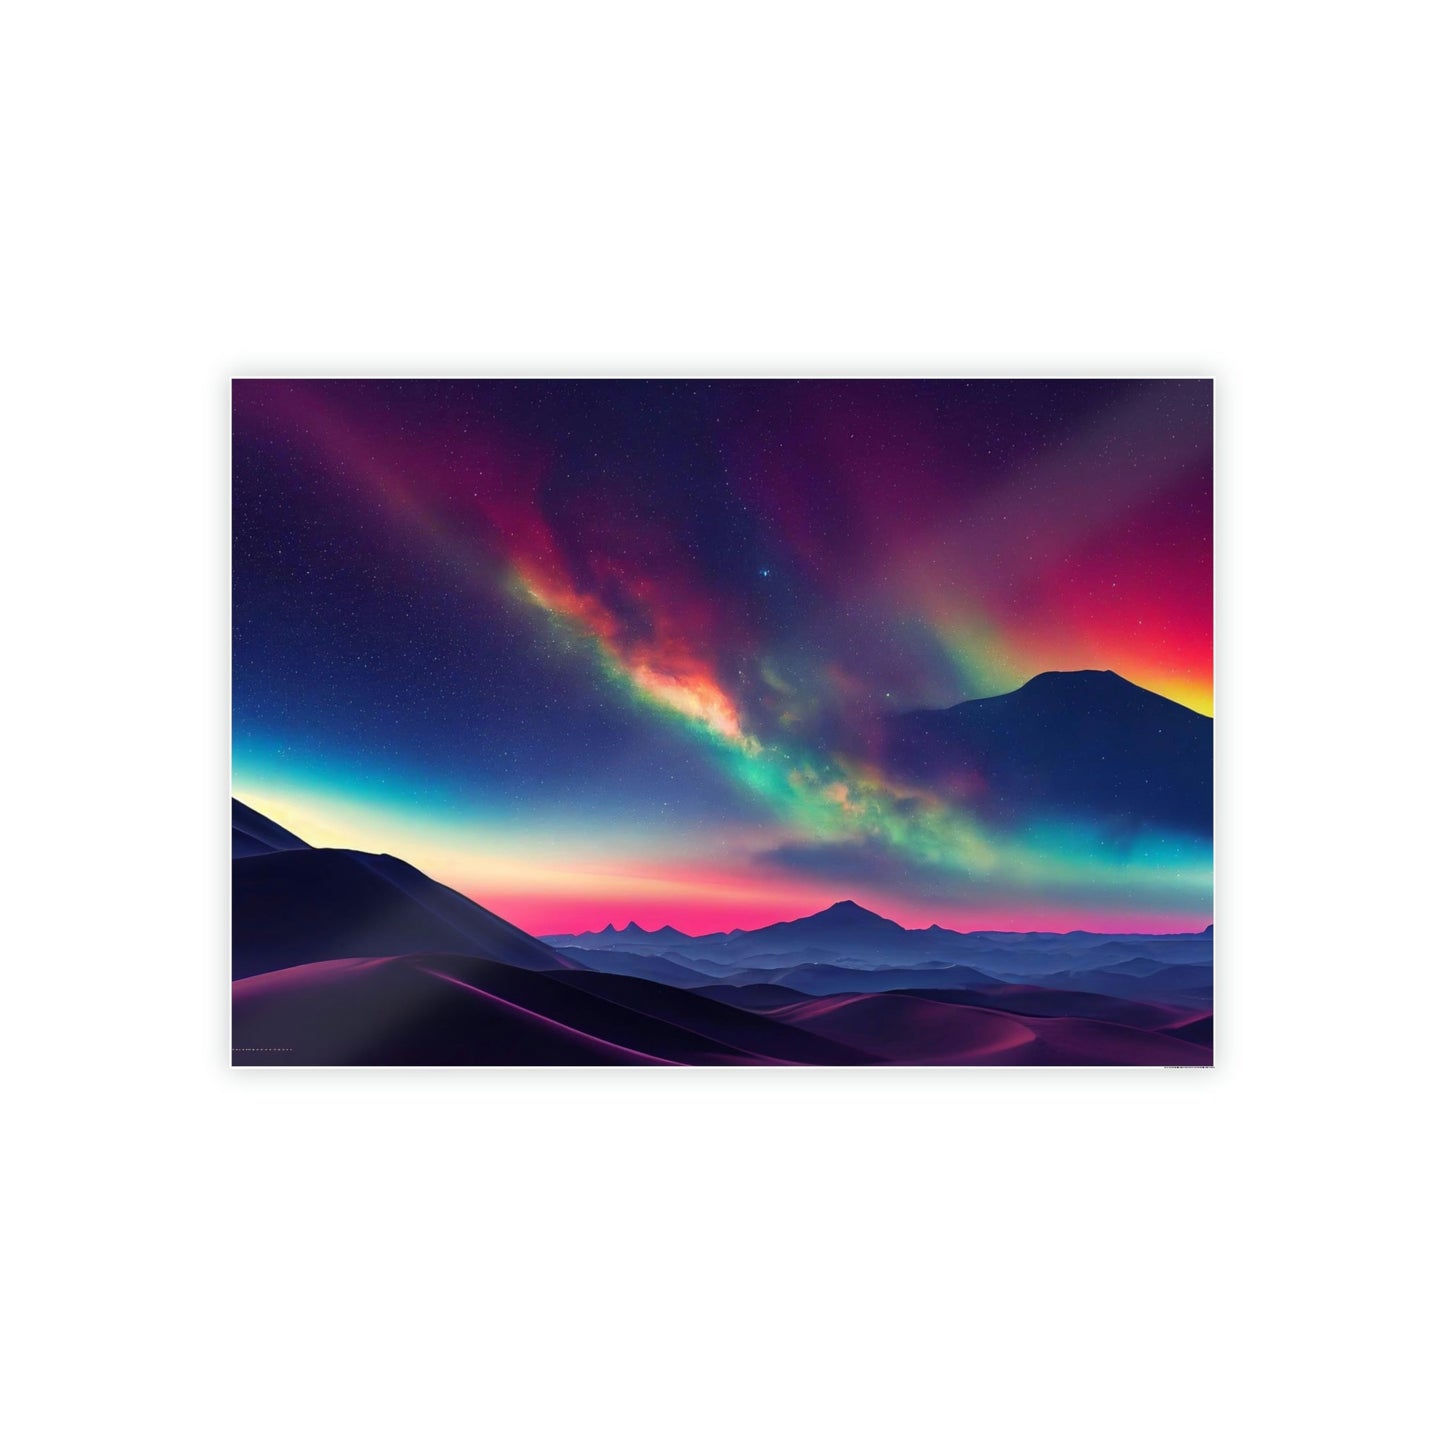 Dazzling Aurora Borealis: A Sparkling Display of Natural Beauty